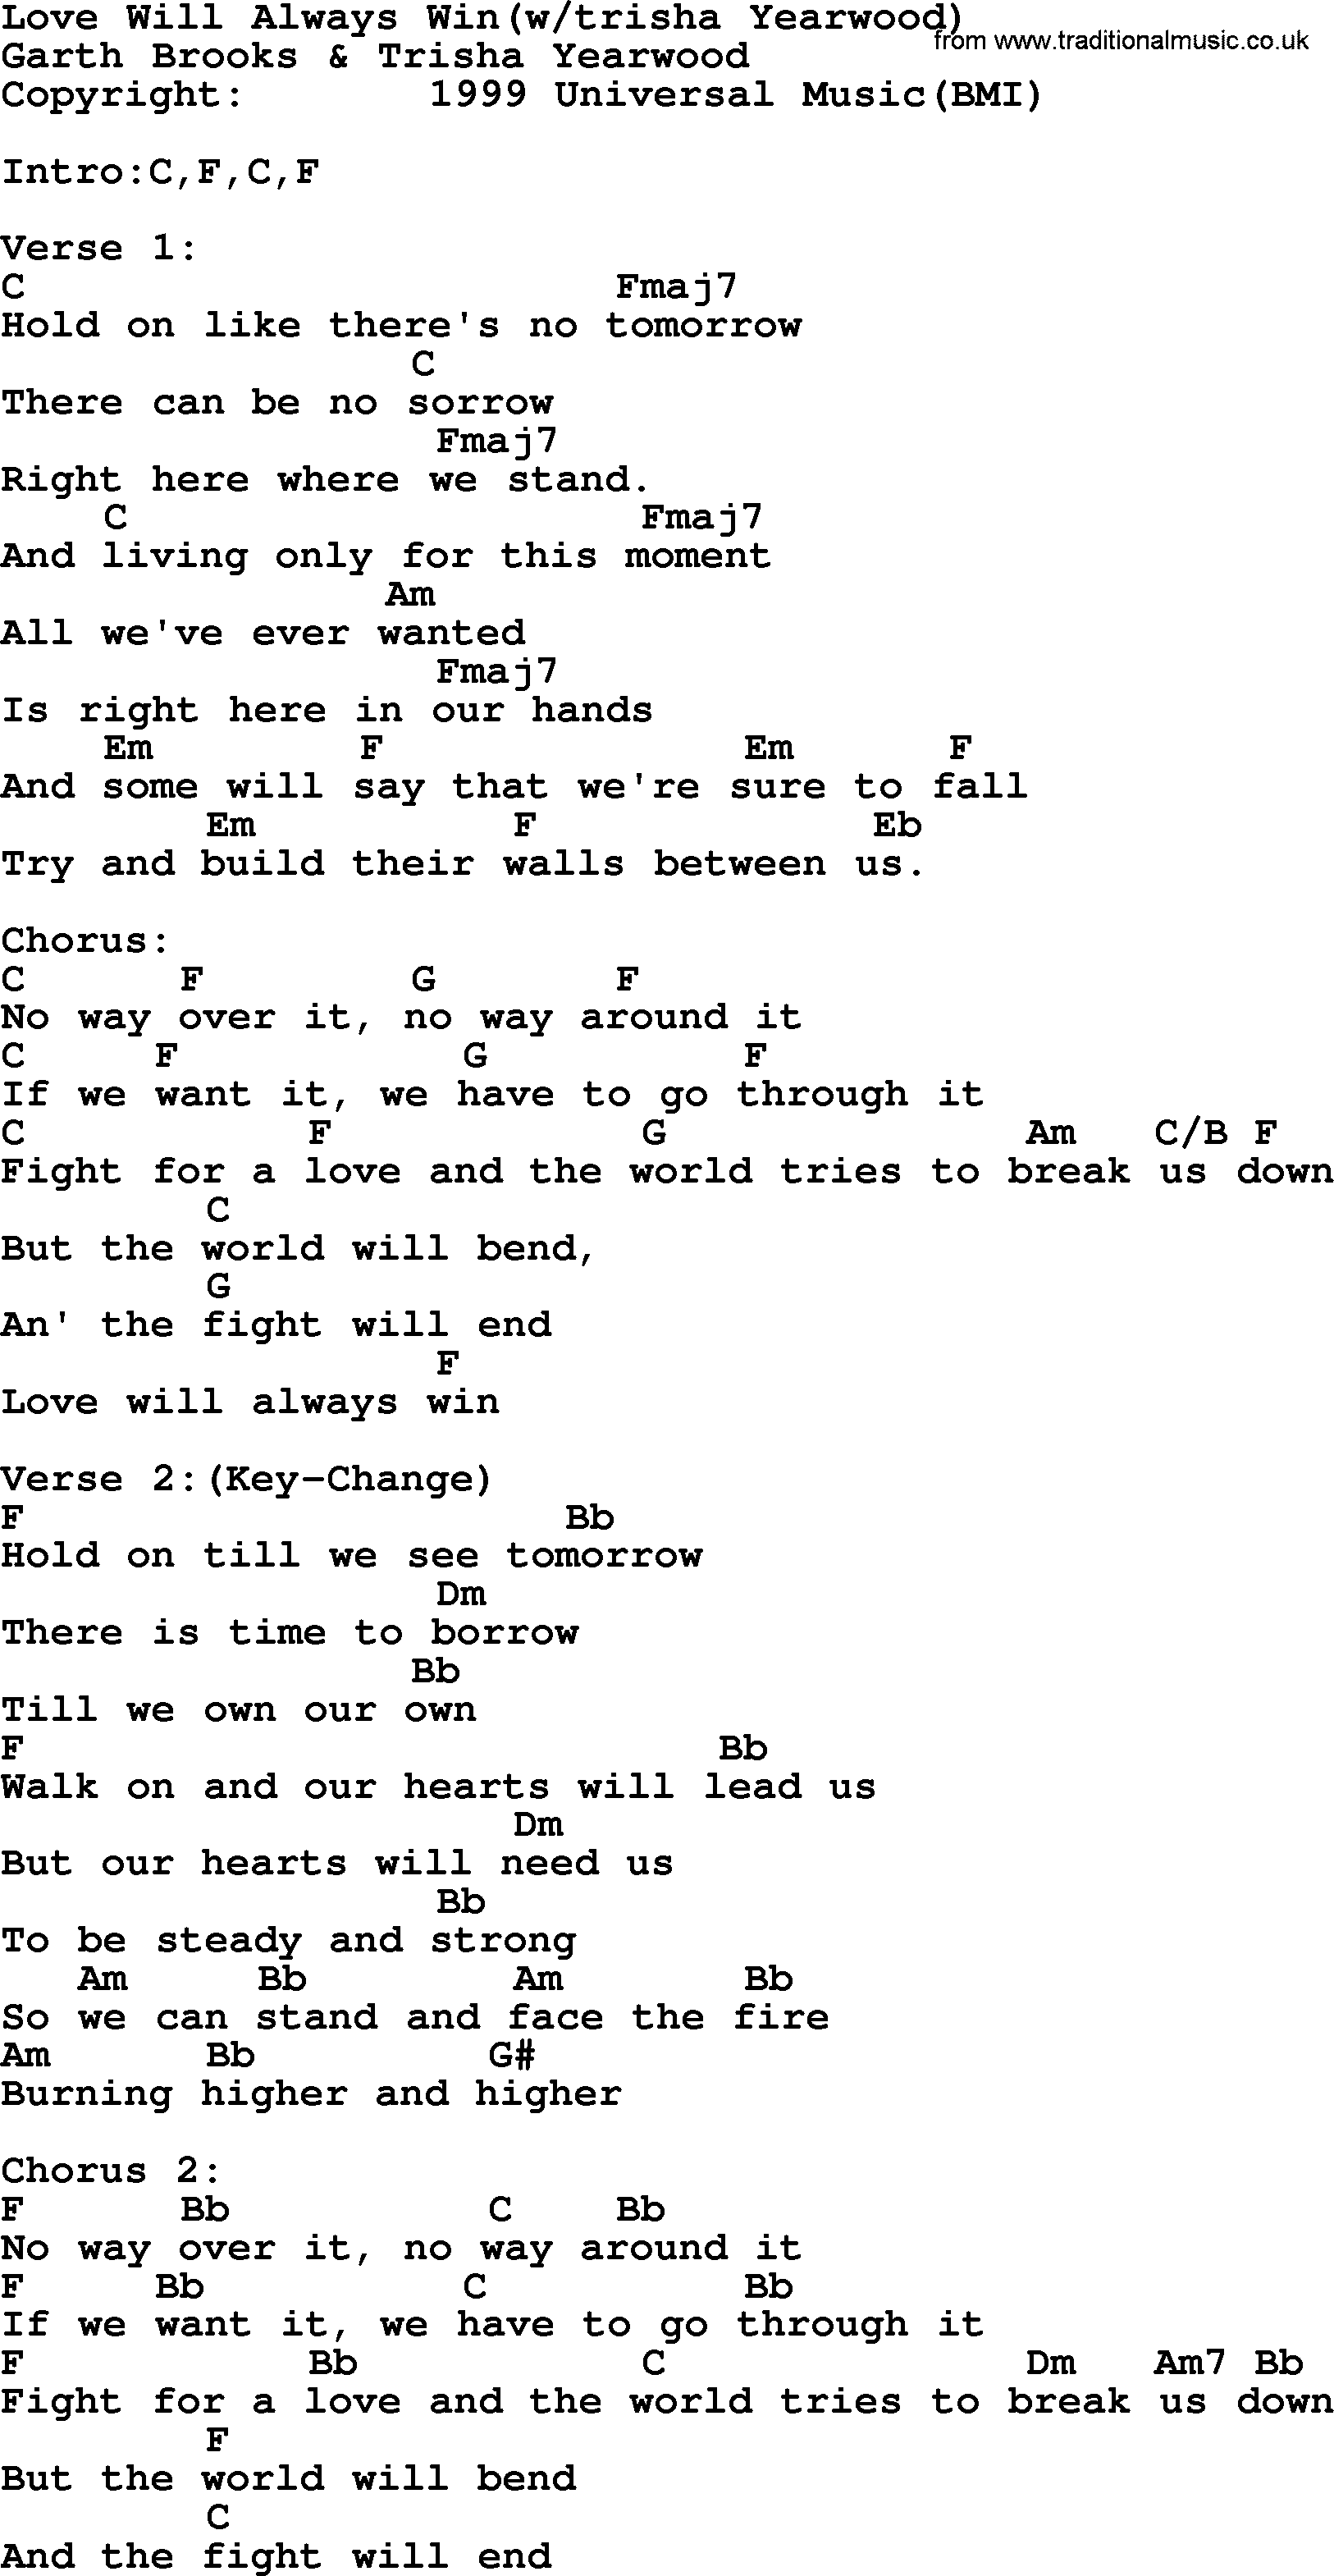 Garth Brooks song: Love Will Always Win(w_trisha Yearwood), lyrics and chords